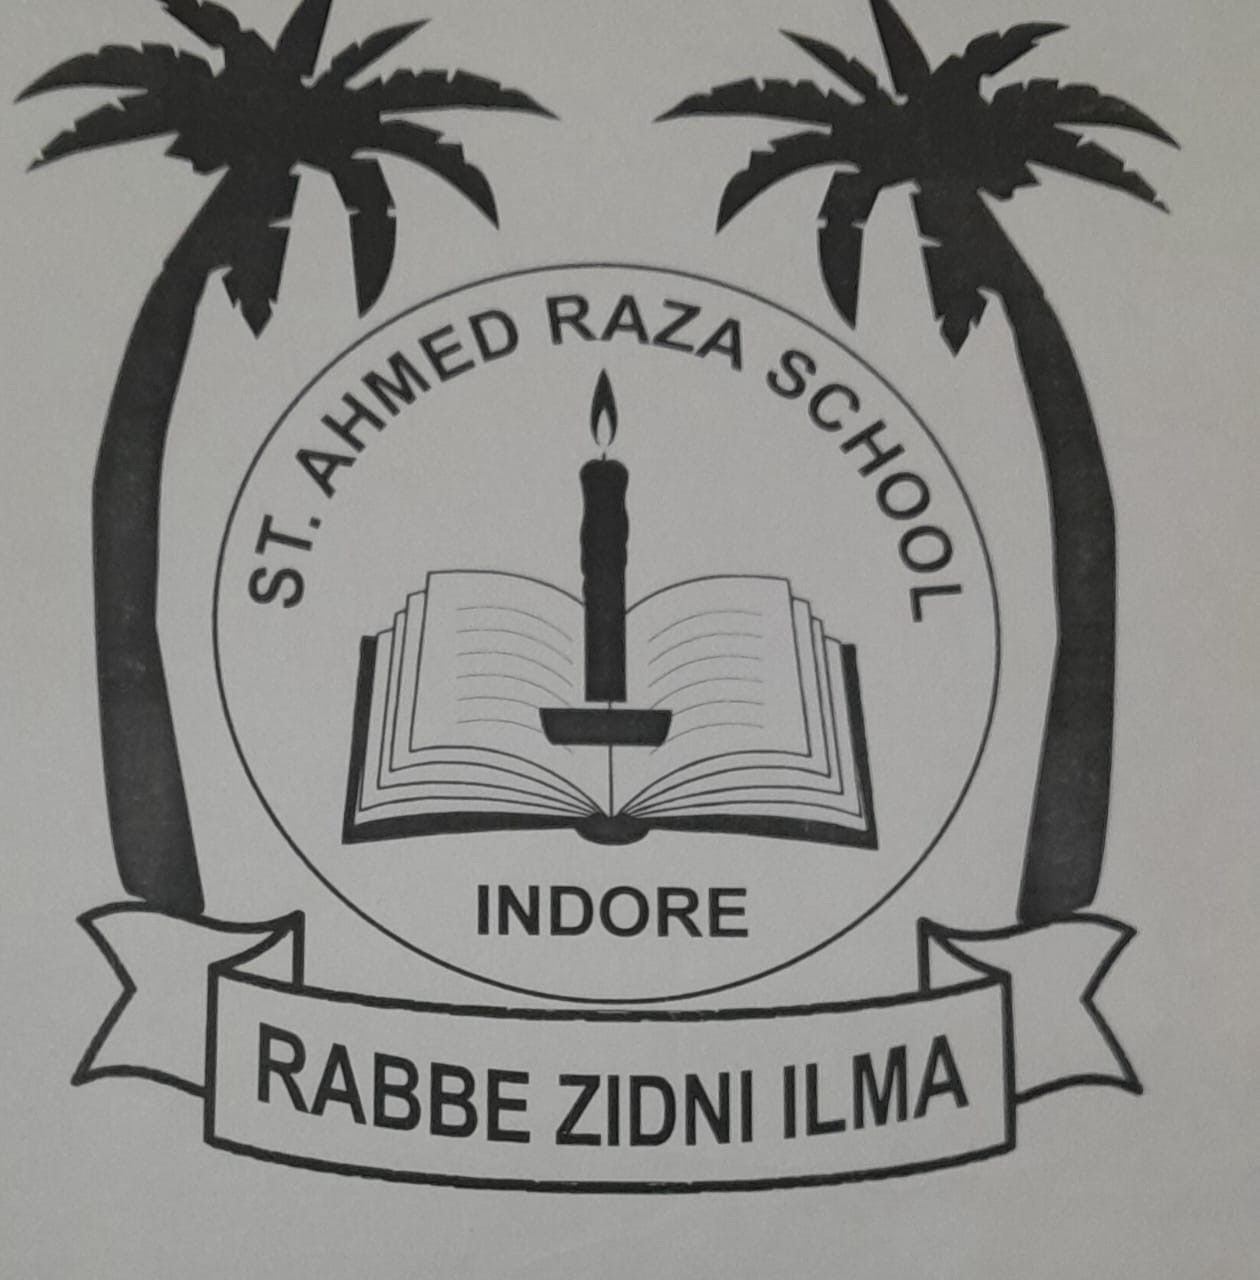 Saint Ahmed Raza School